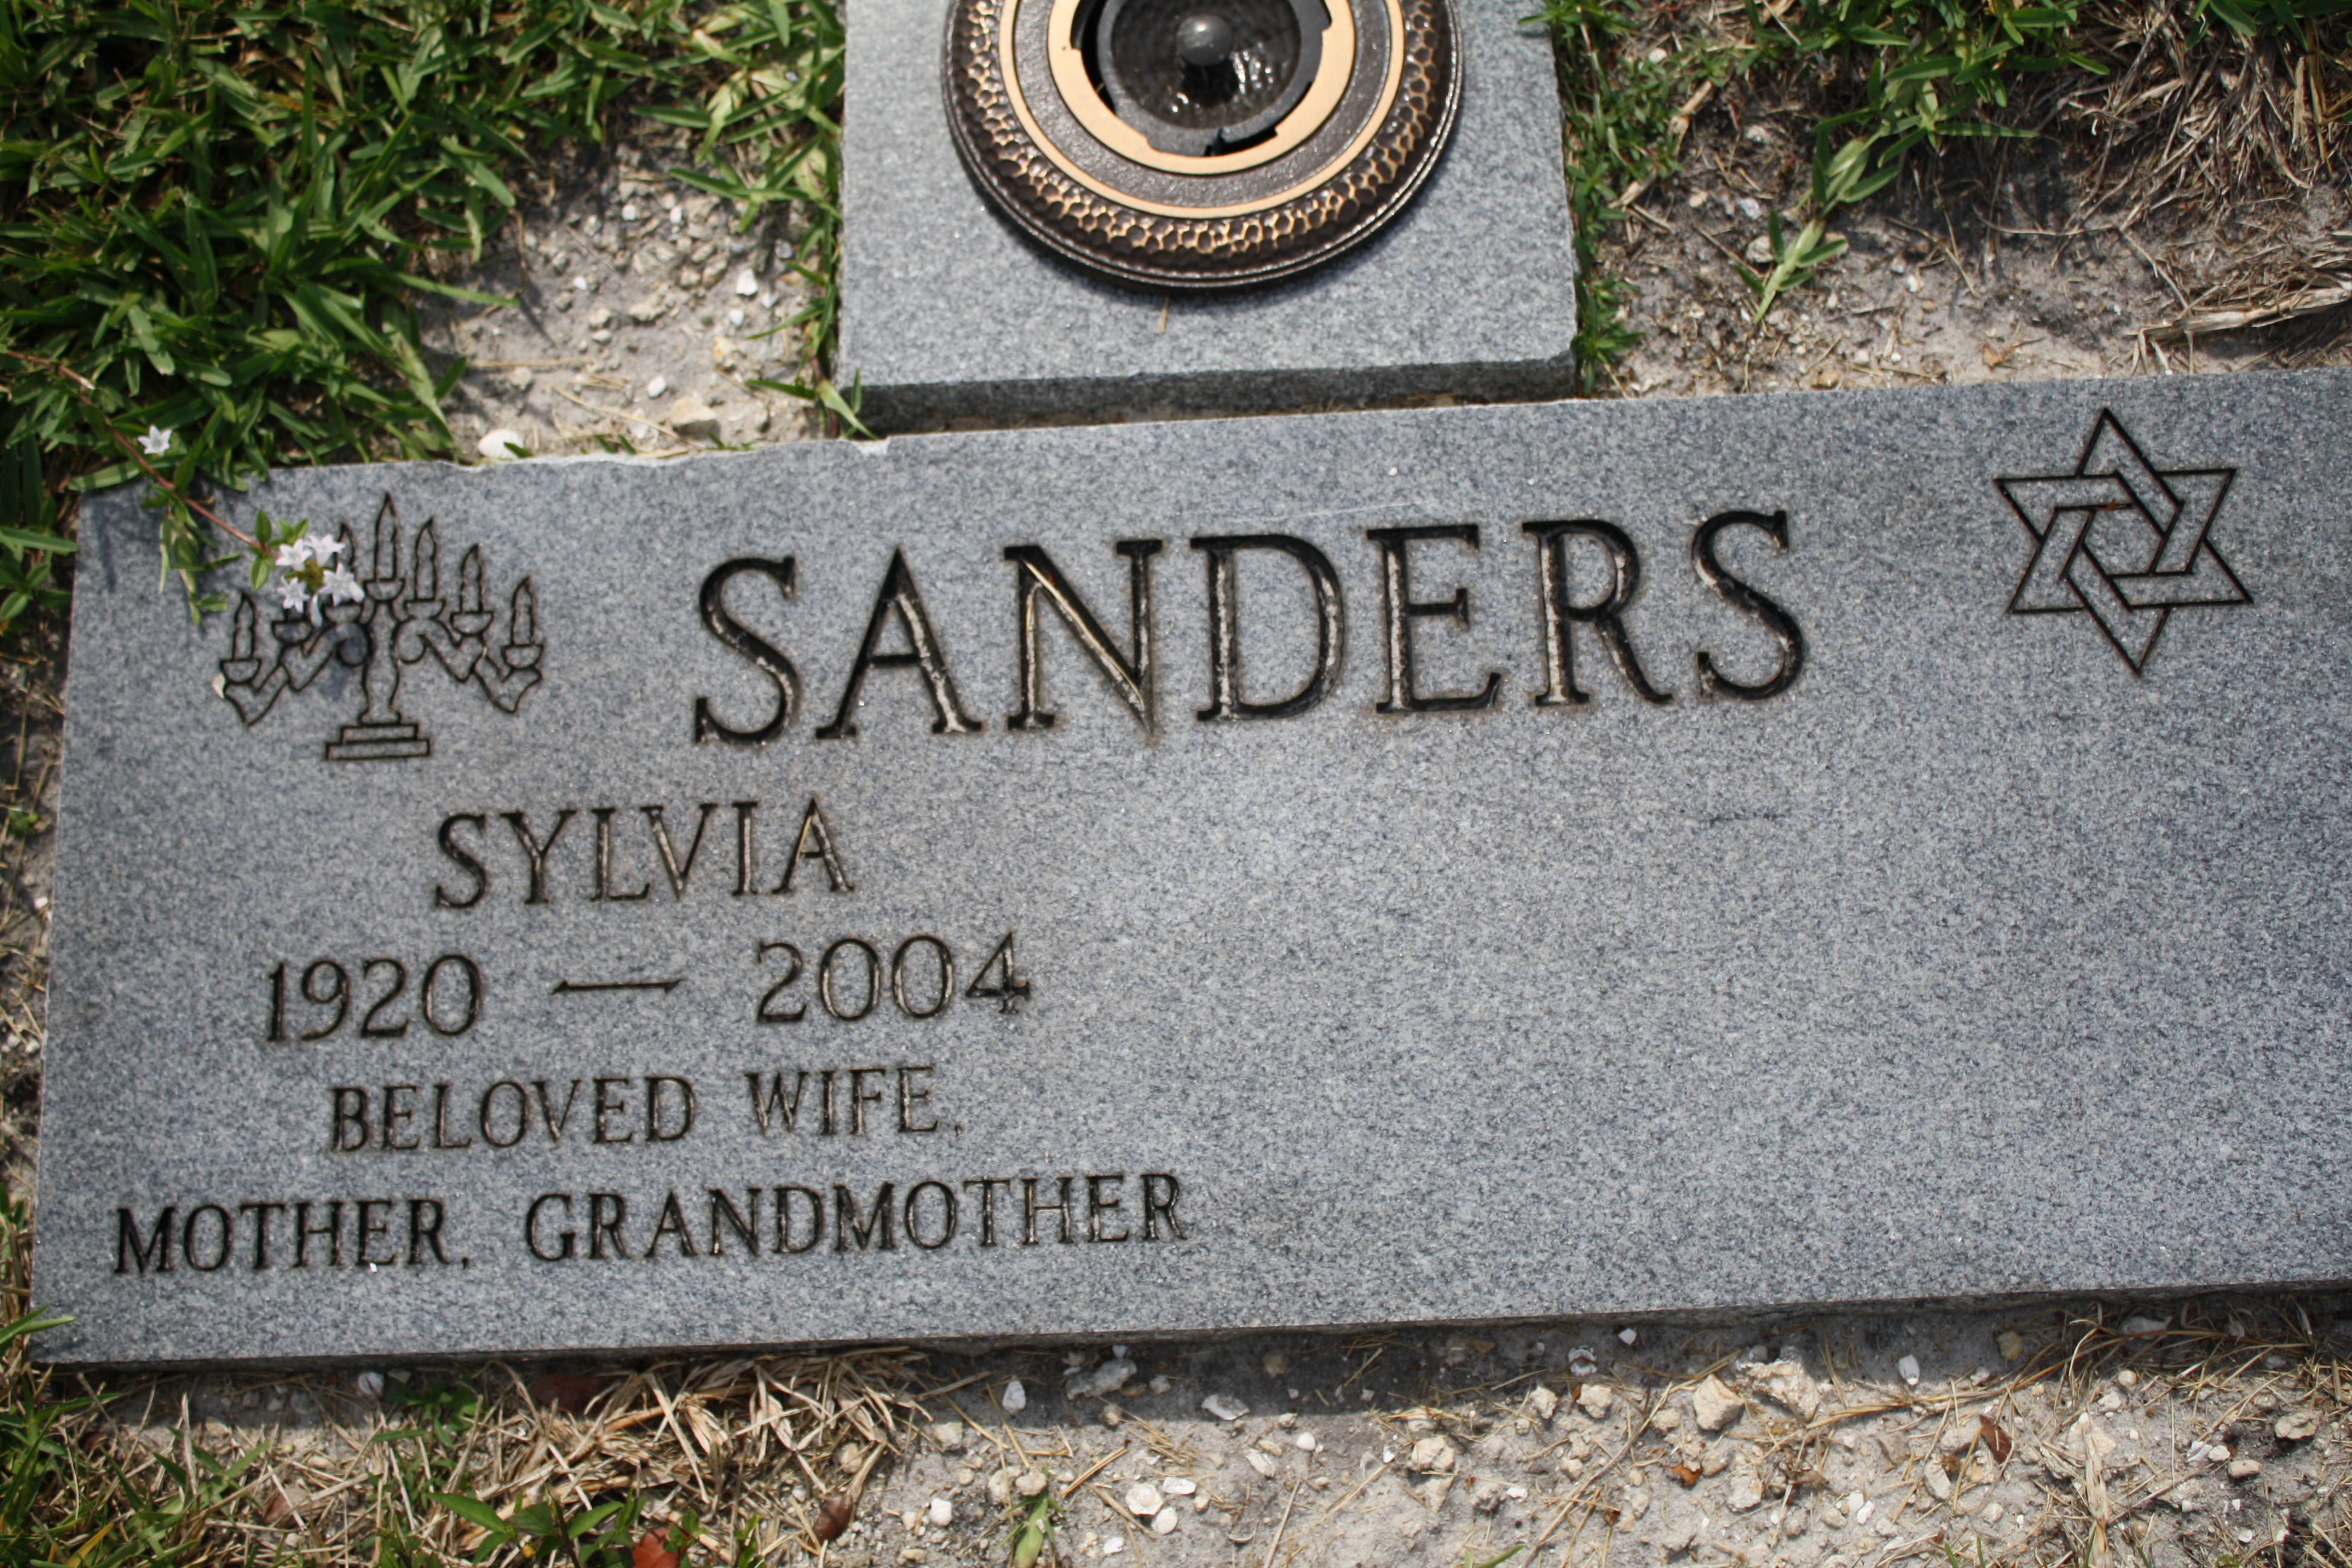 Sylvia Sanders